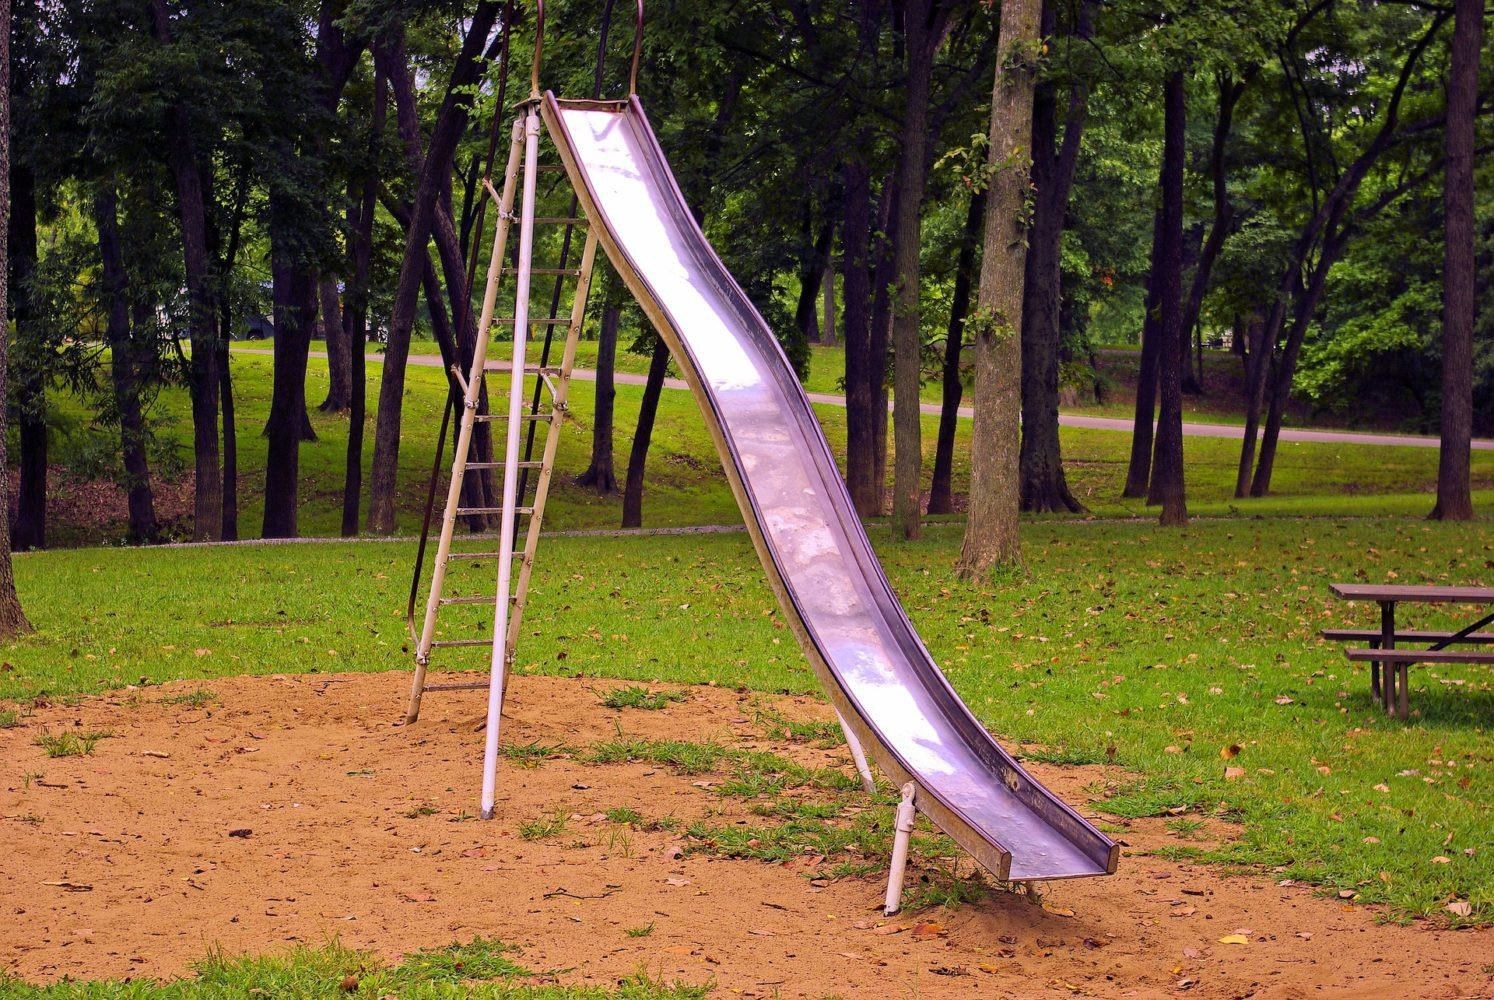 A rickety metal slide at a park